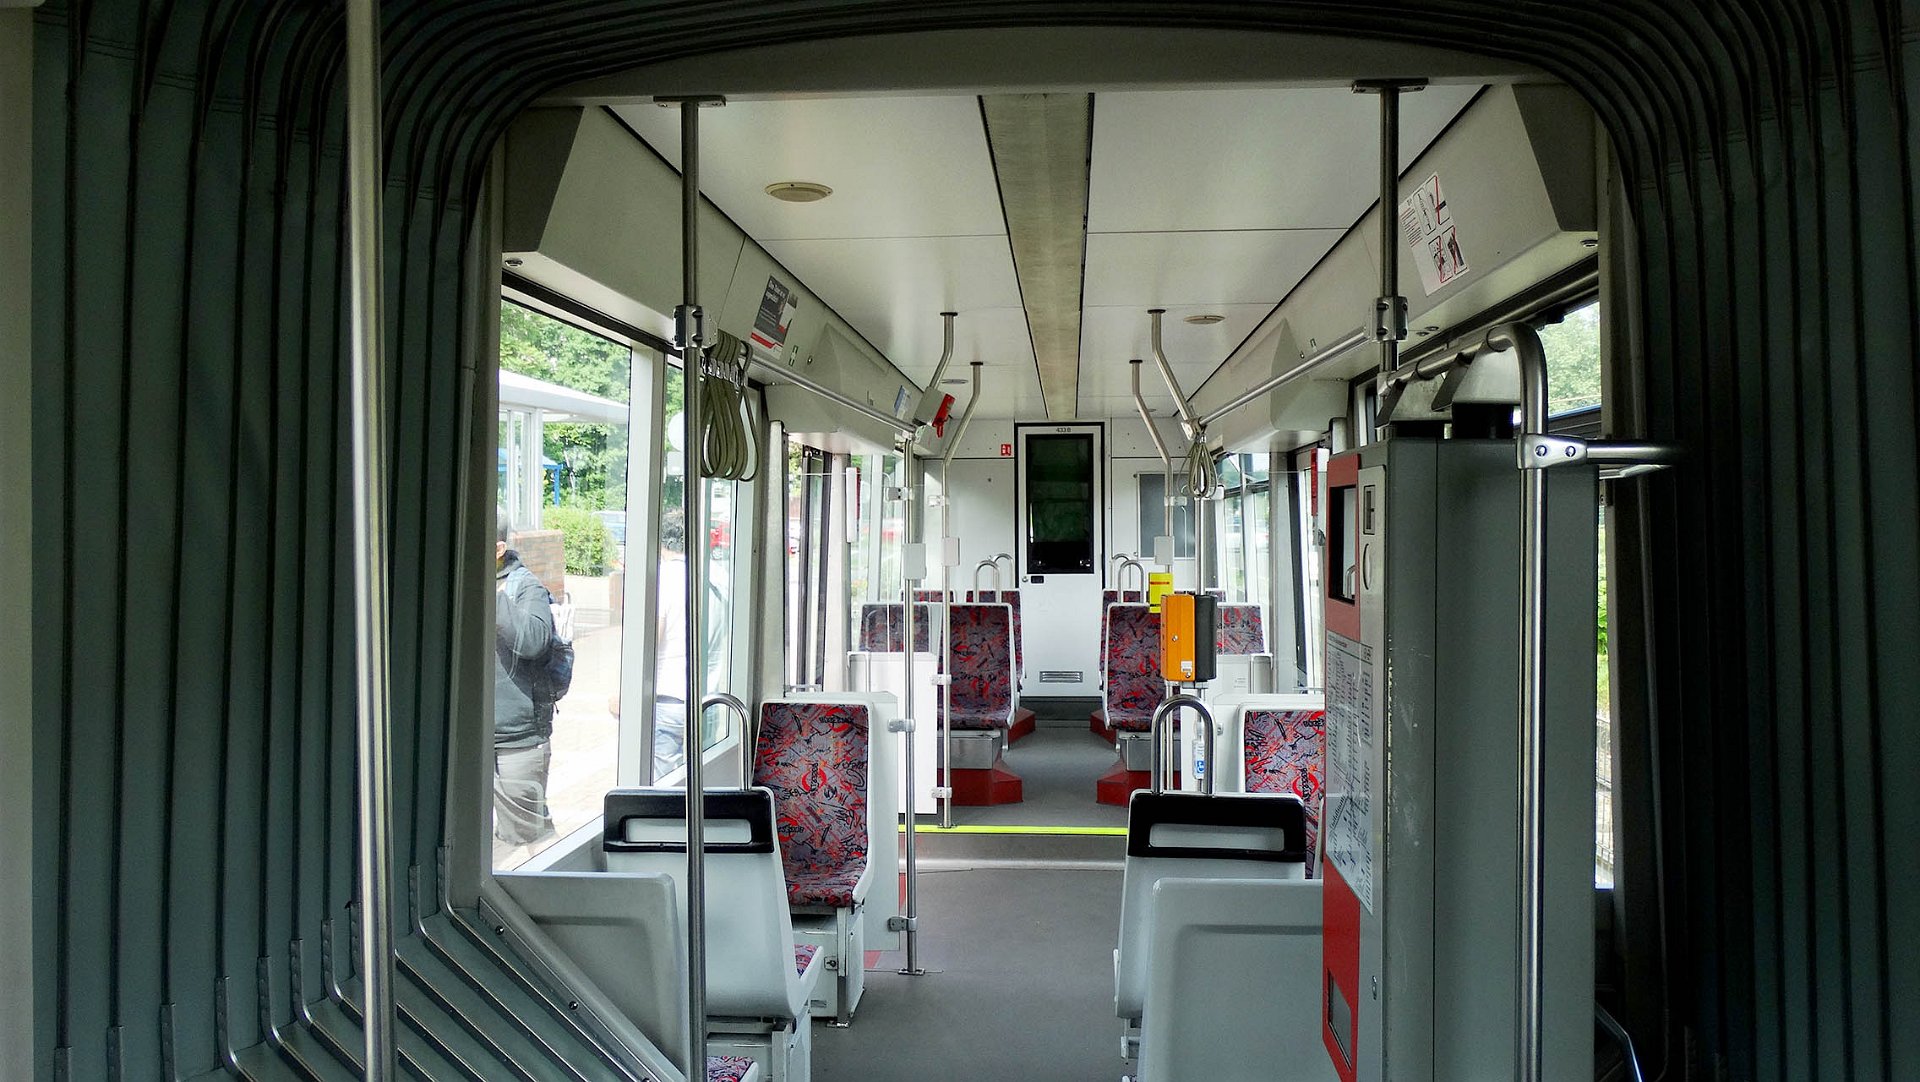 NF6D 433 Die NF6D haben 72 Sitz und 100 Stehplätze. NF6D trams have a crushload of 172, with 72 seats.